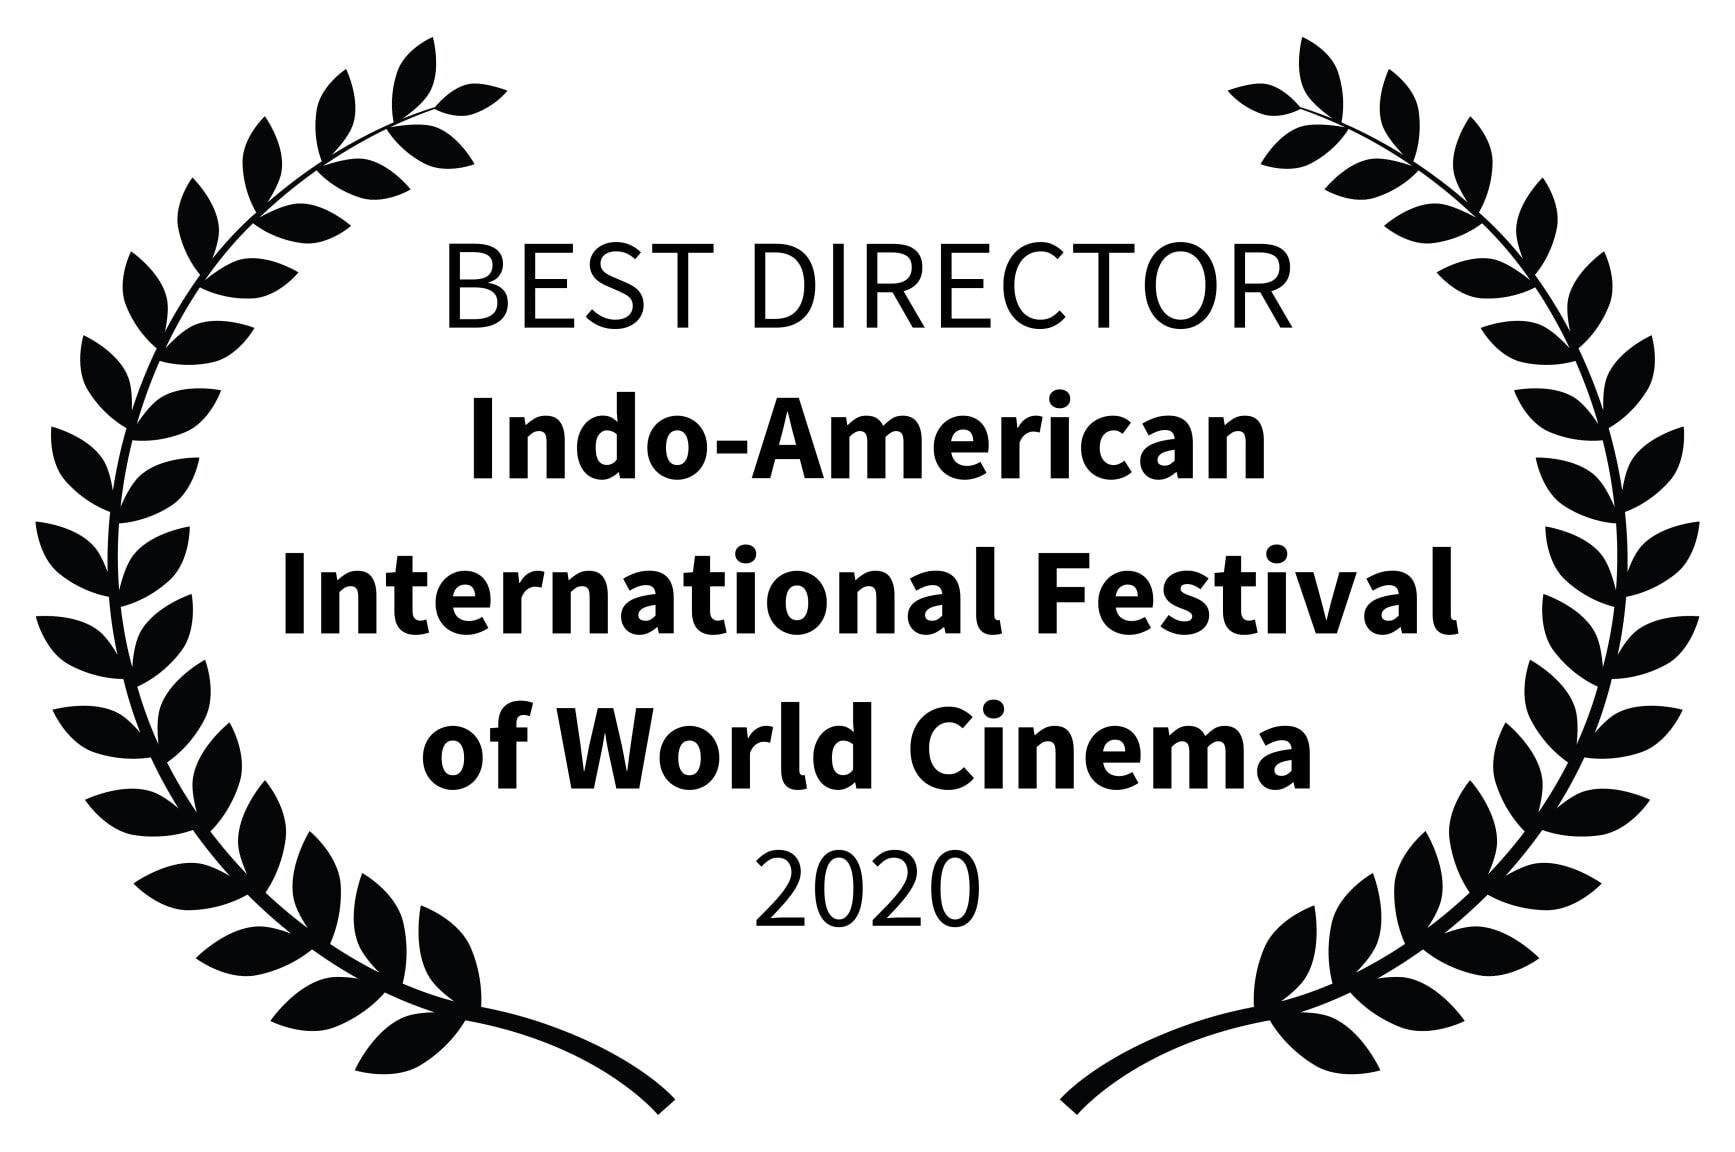 BEST DIRECTOR - Indo-American International Festival of World Cinema - 2020